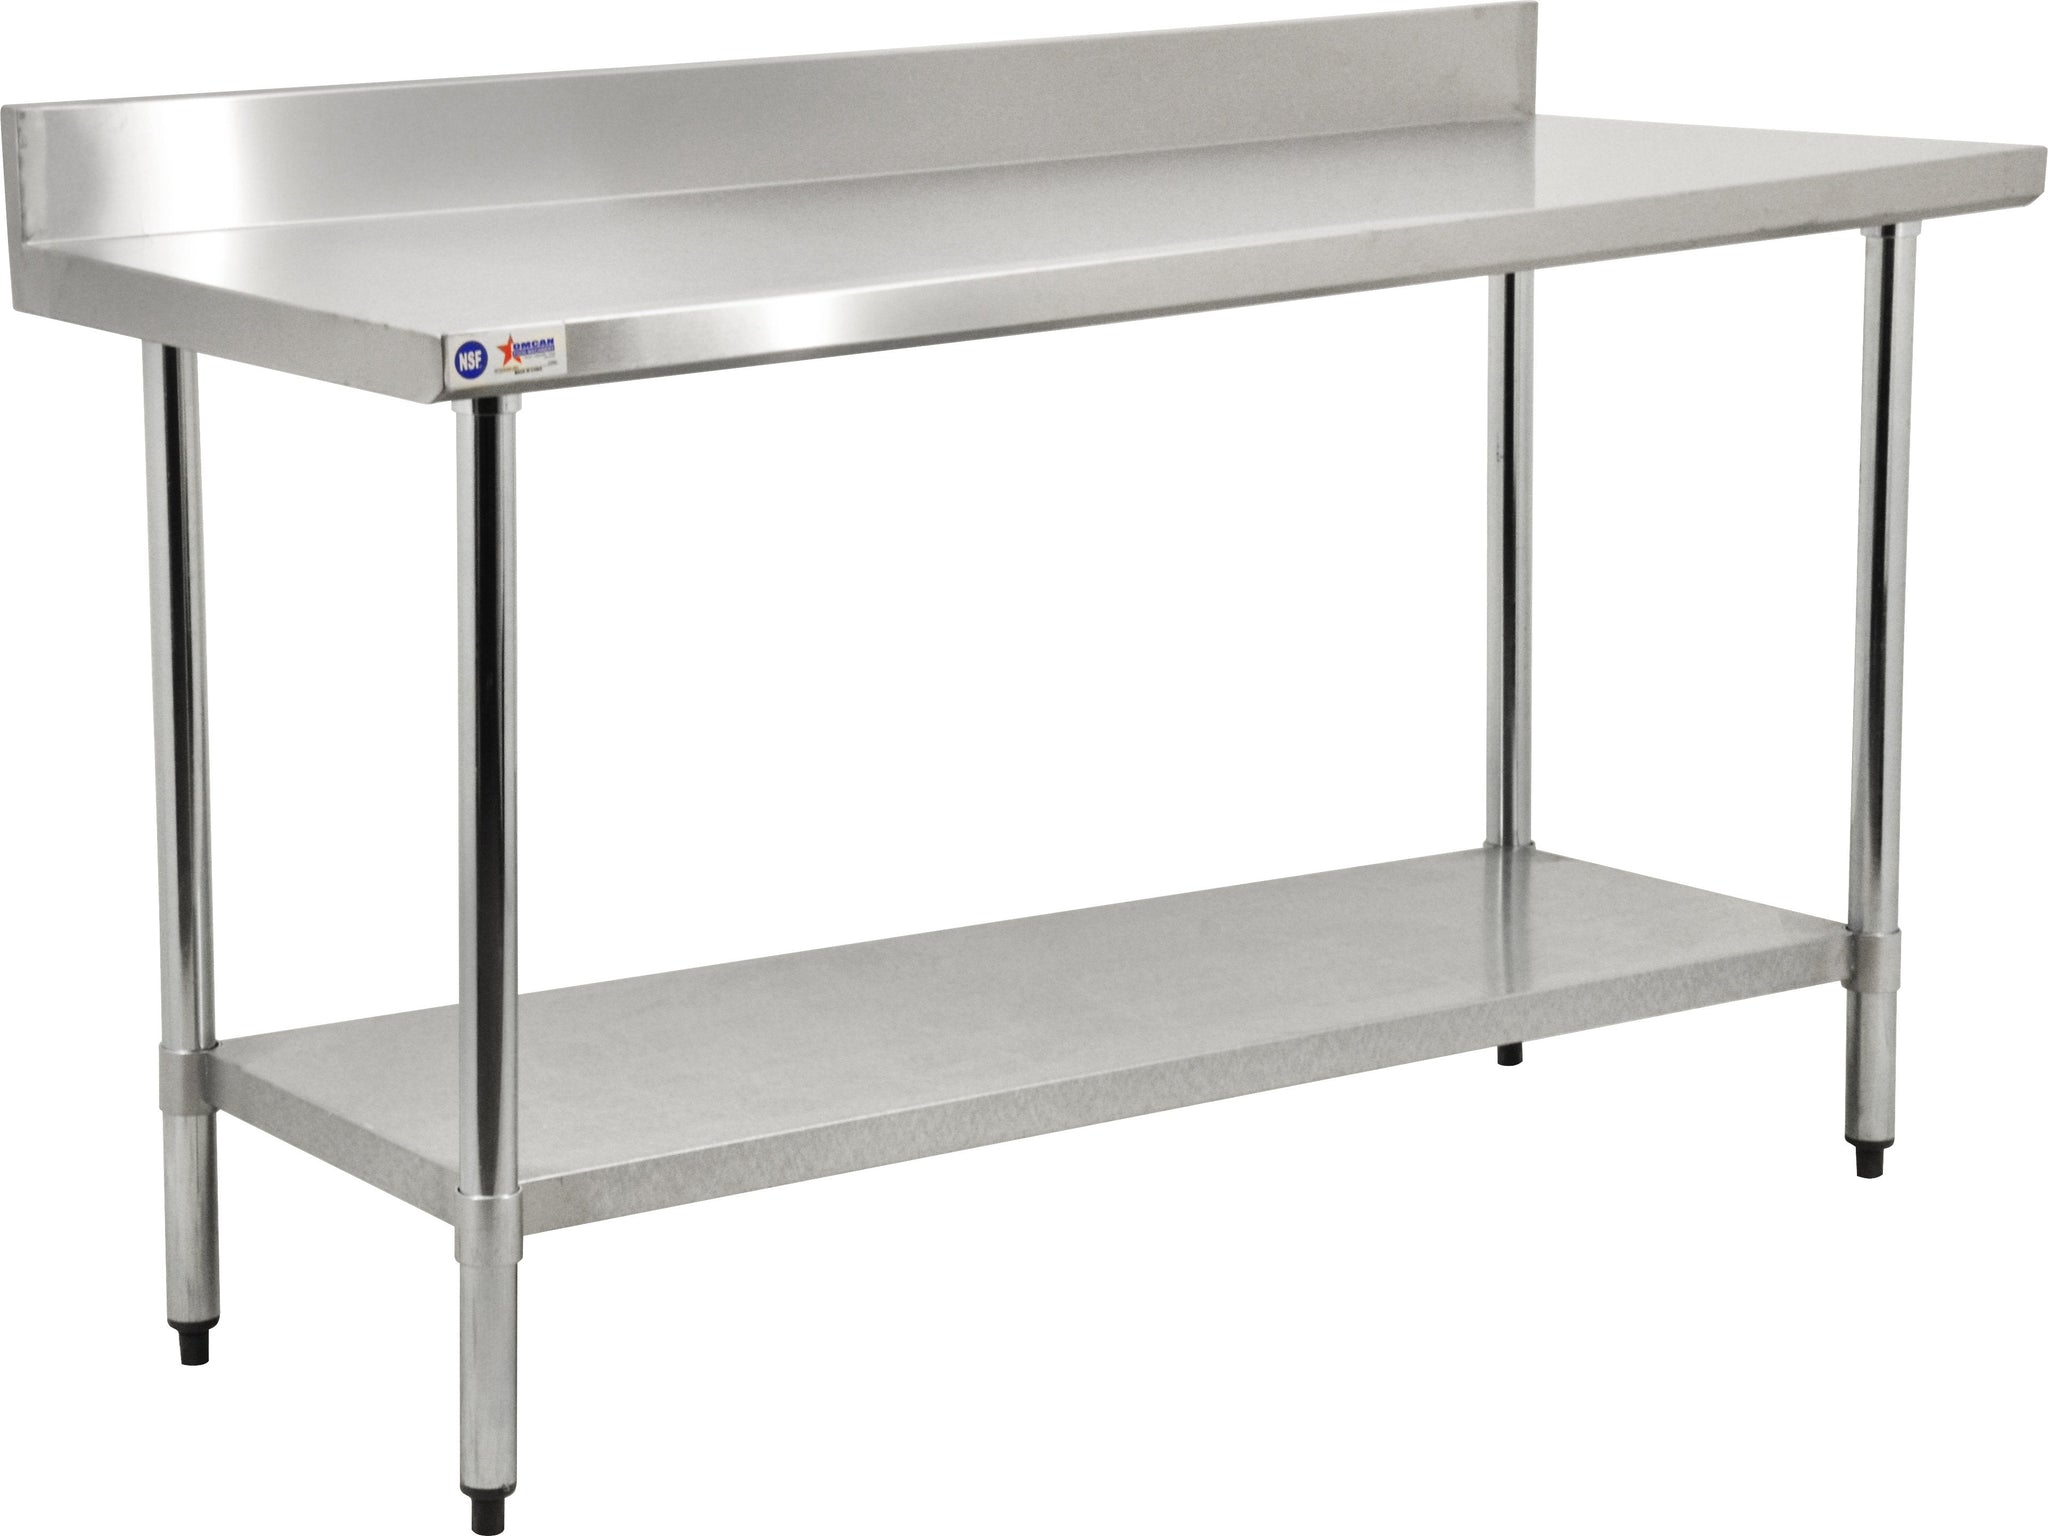 Omcan - 30” x 60" Elite Stainless Steel Work Table with 4" Backsplash - 23804